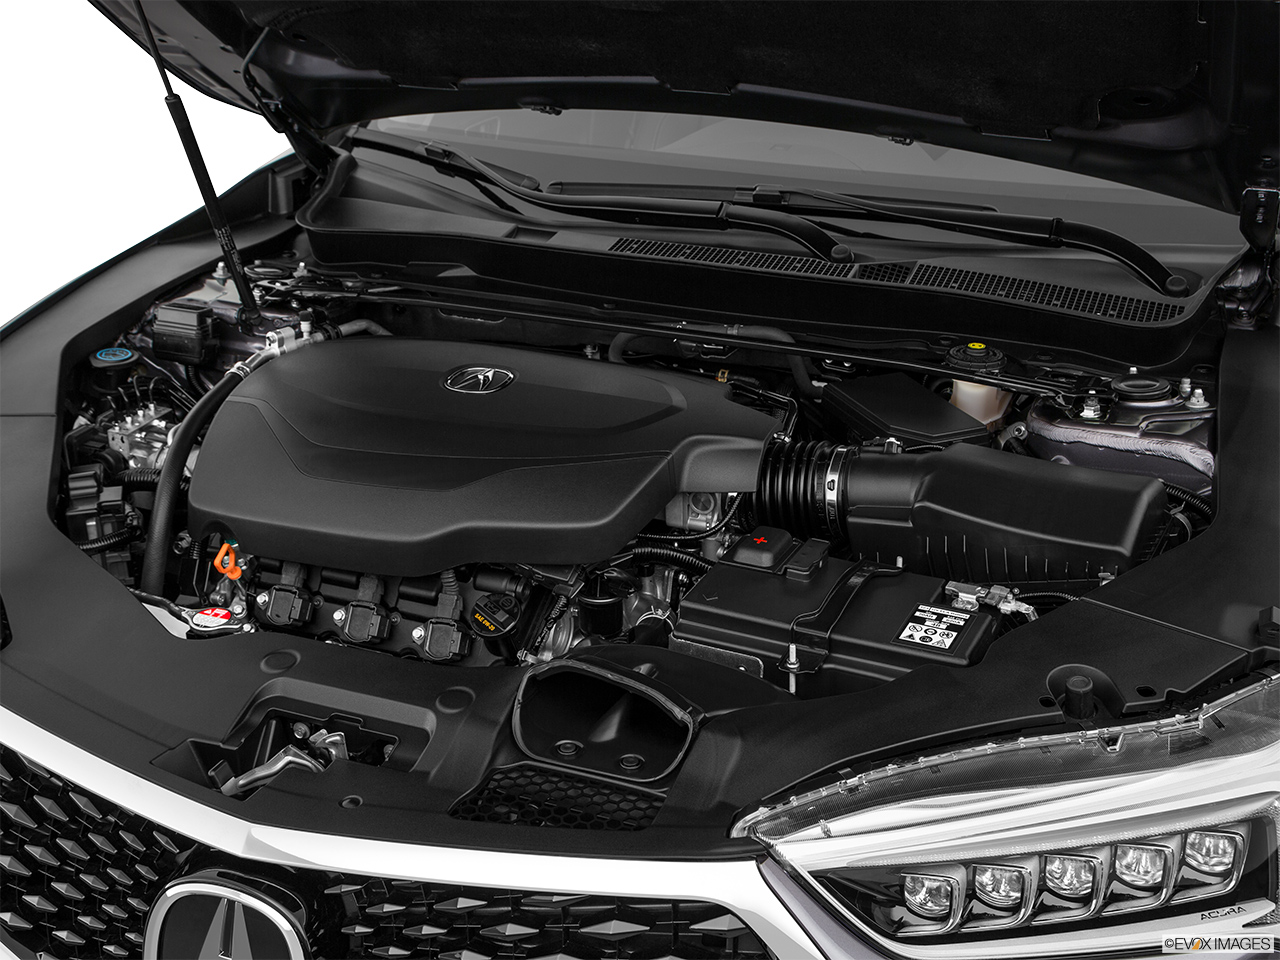 2018 Acura TLX 3.5L Engine. 